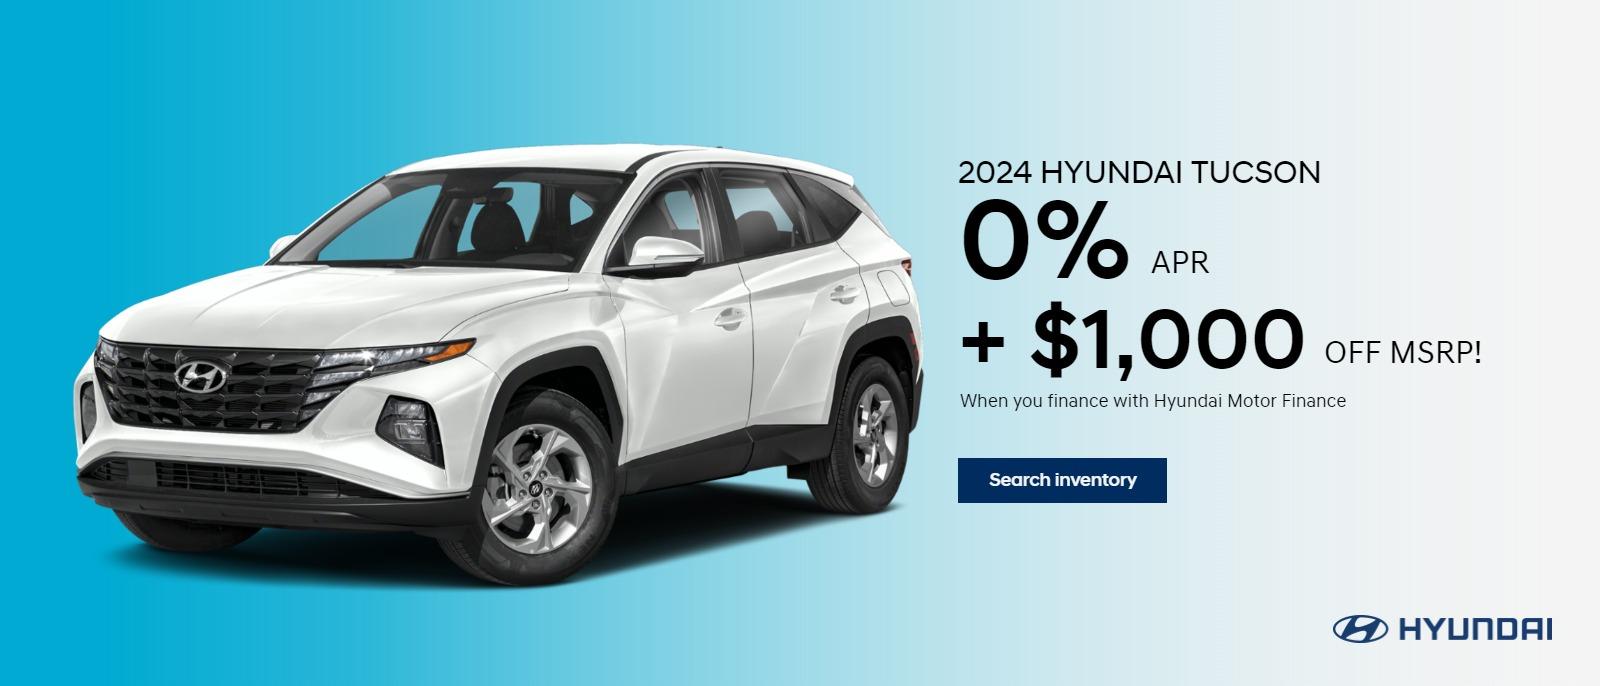 2024 HYUNDAI Tucson
0% APR
+$1,000 off MSRP!
--When you finance with Hyundai Motor Finance--